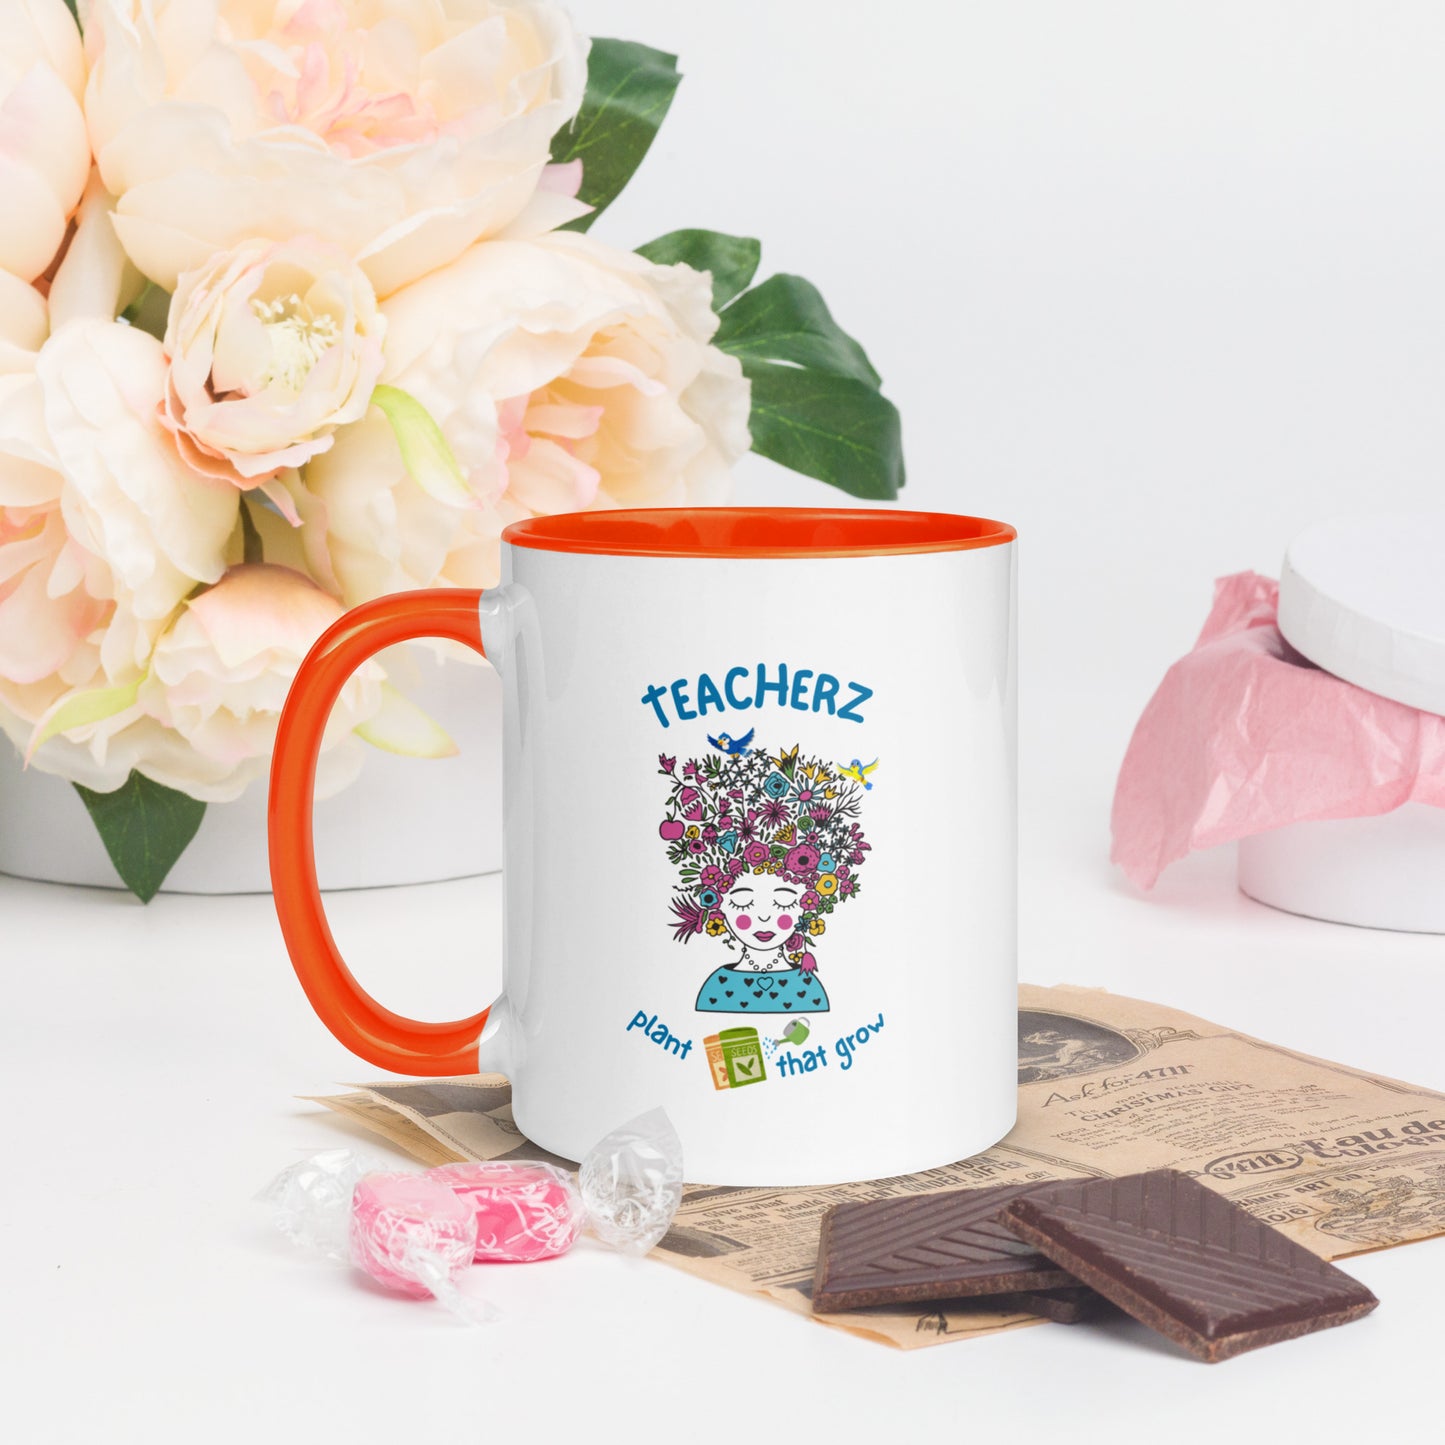 Teacherz Plant Seeds That Grow Mug with Color Inside, Teacher Mugs, Colorful Mugs, Ceramic Mugs, Gifts for Teachers